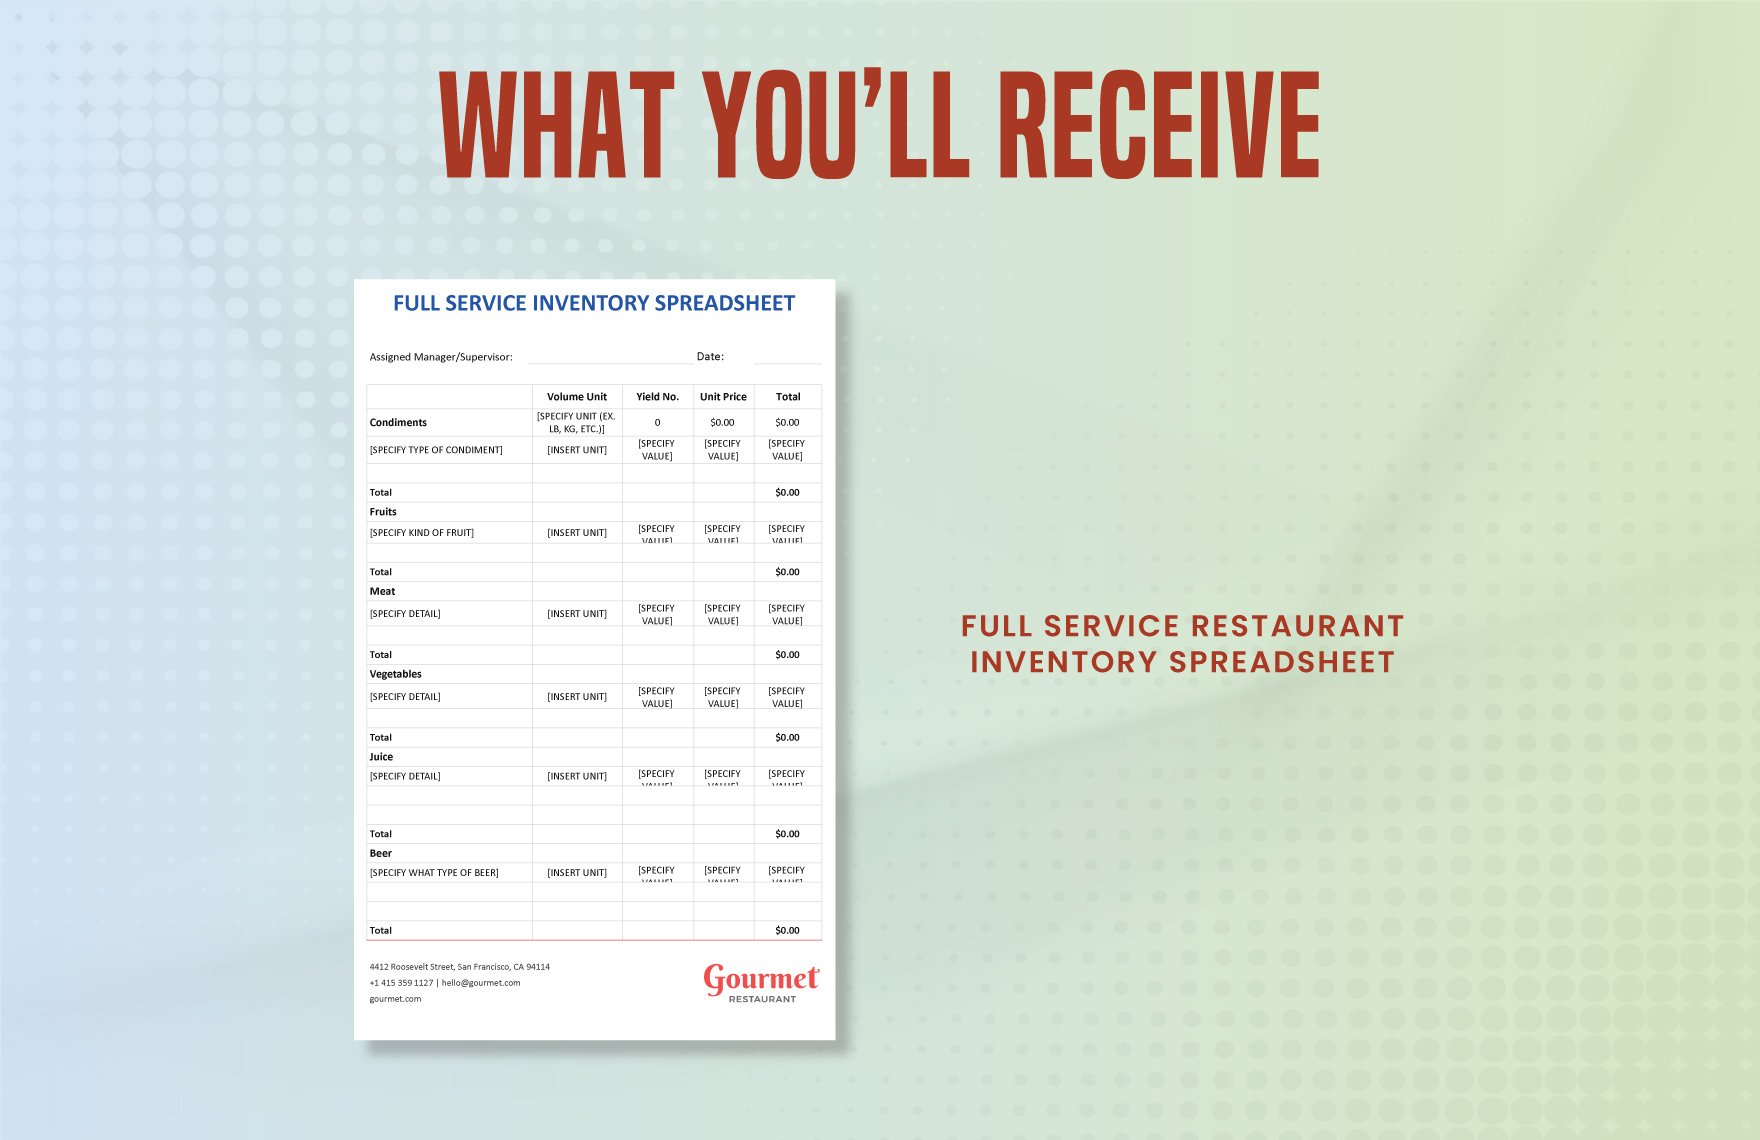 Full Service Restaurant Inventory Spreadsheet Template